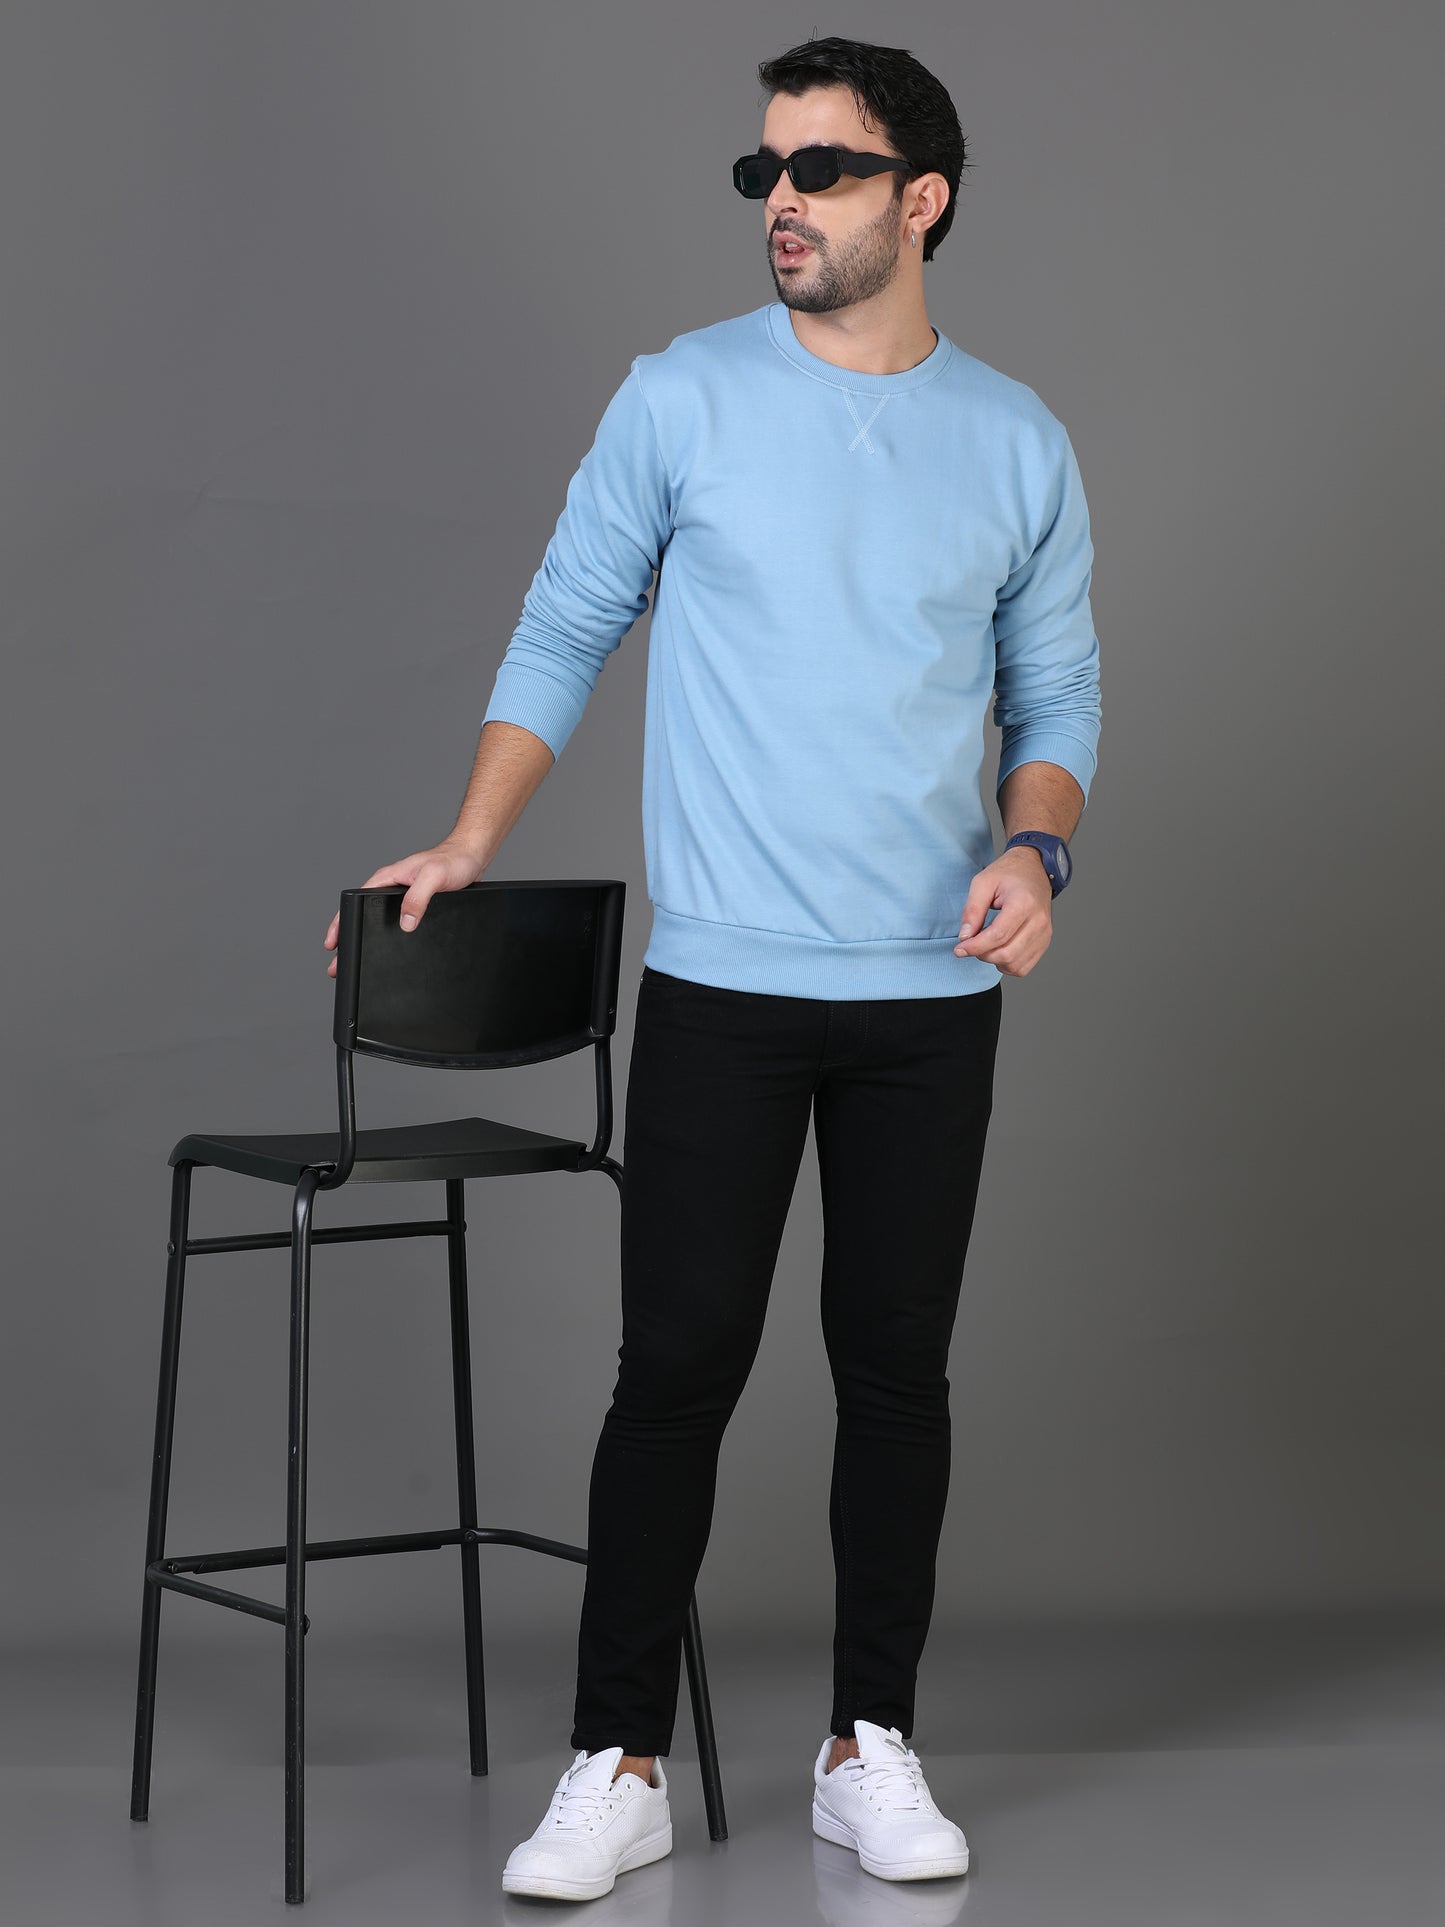 Blue Plain Sweatshirt